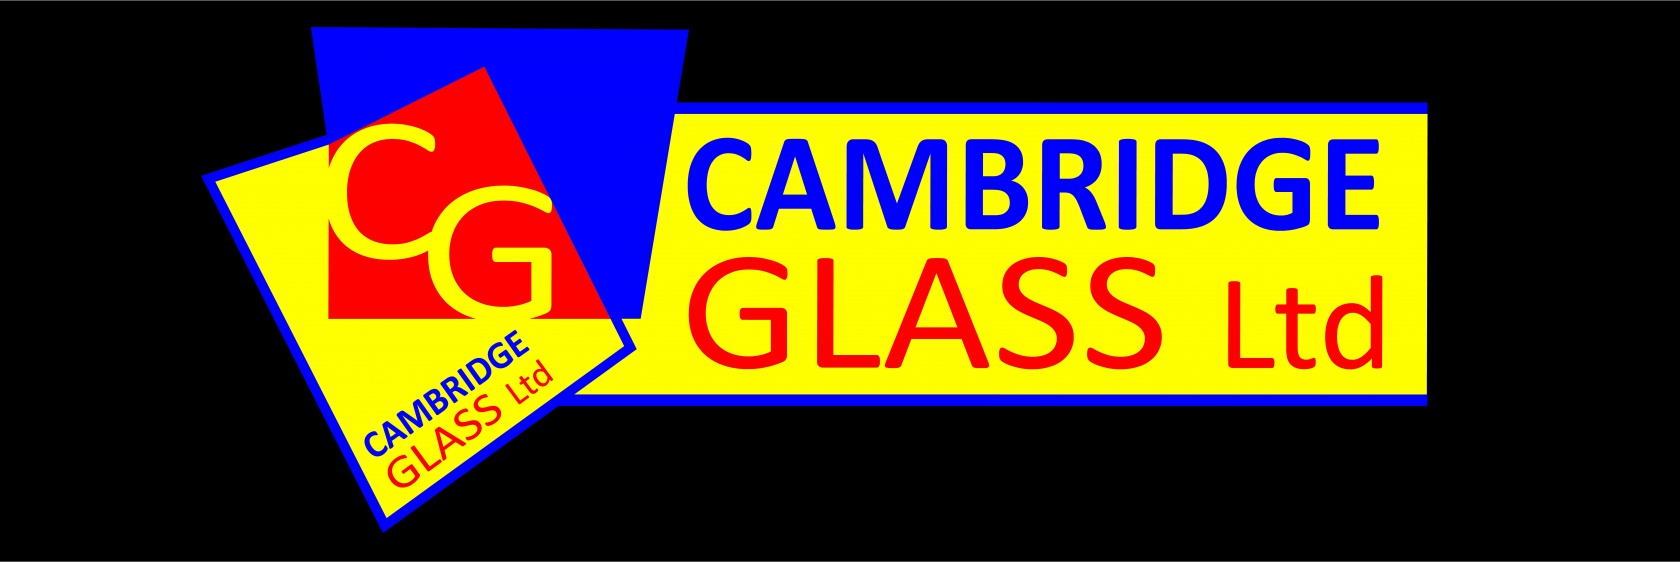 Cambridge Glass Logo - Hight def